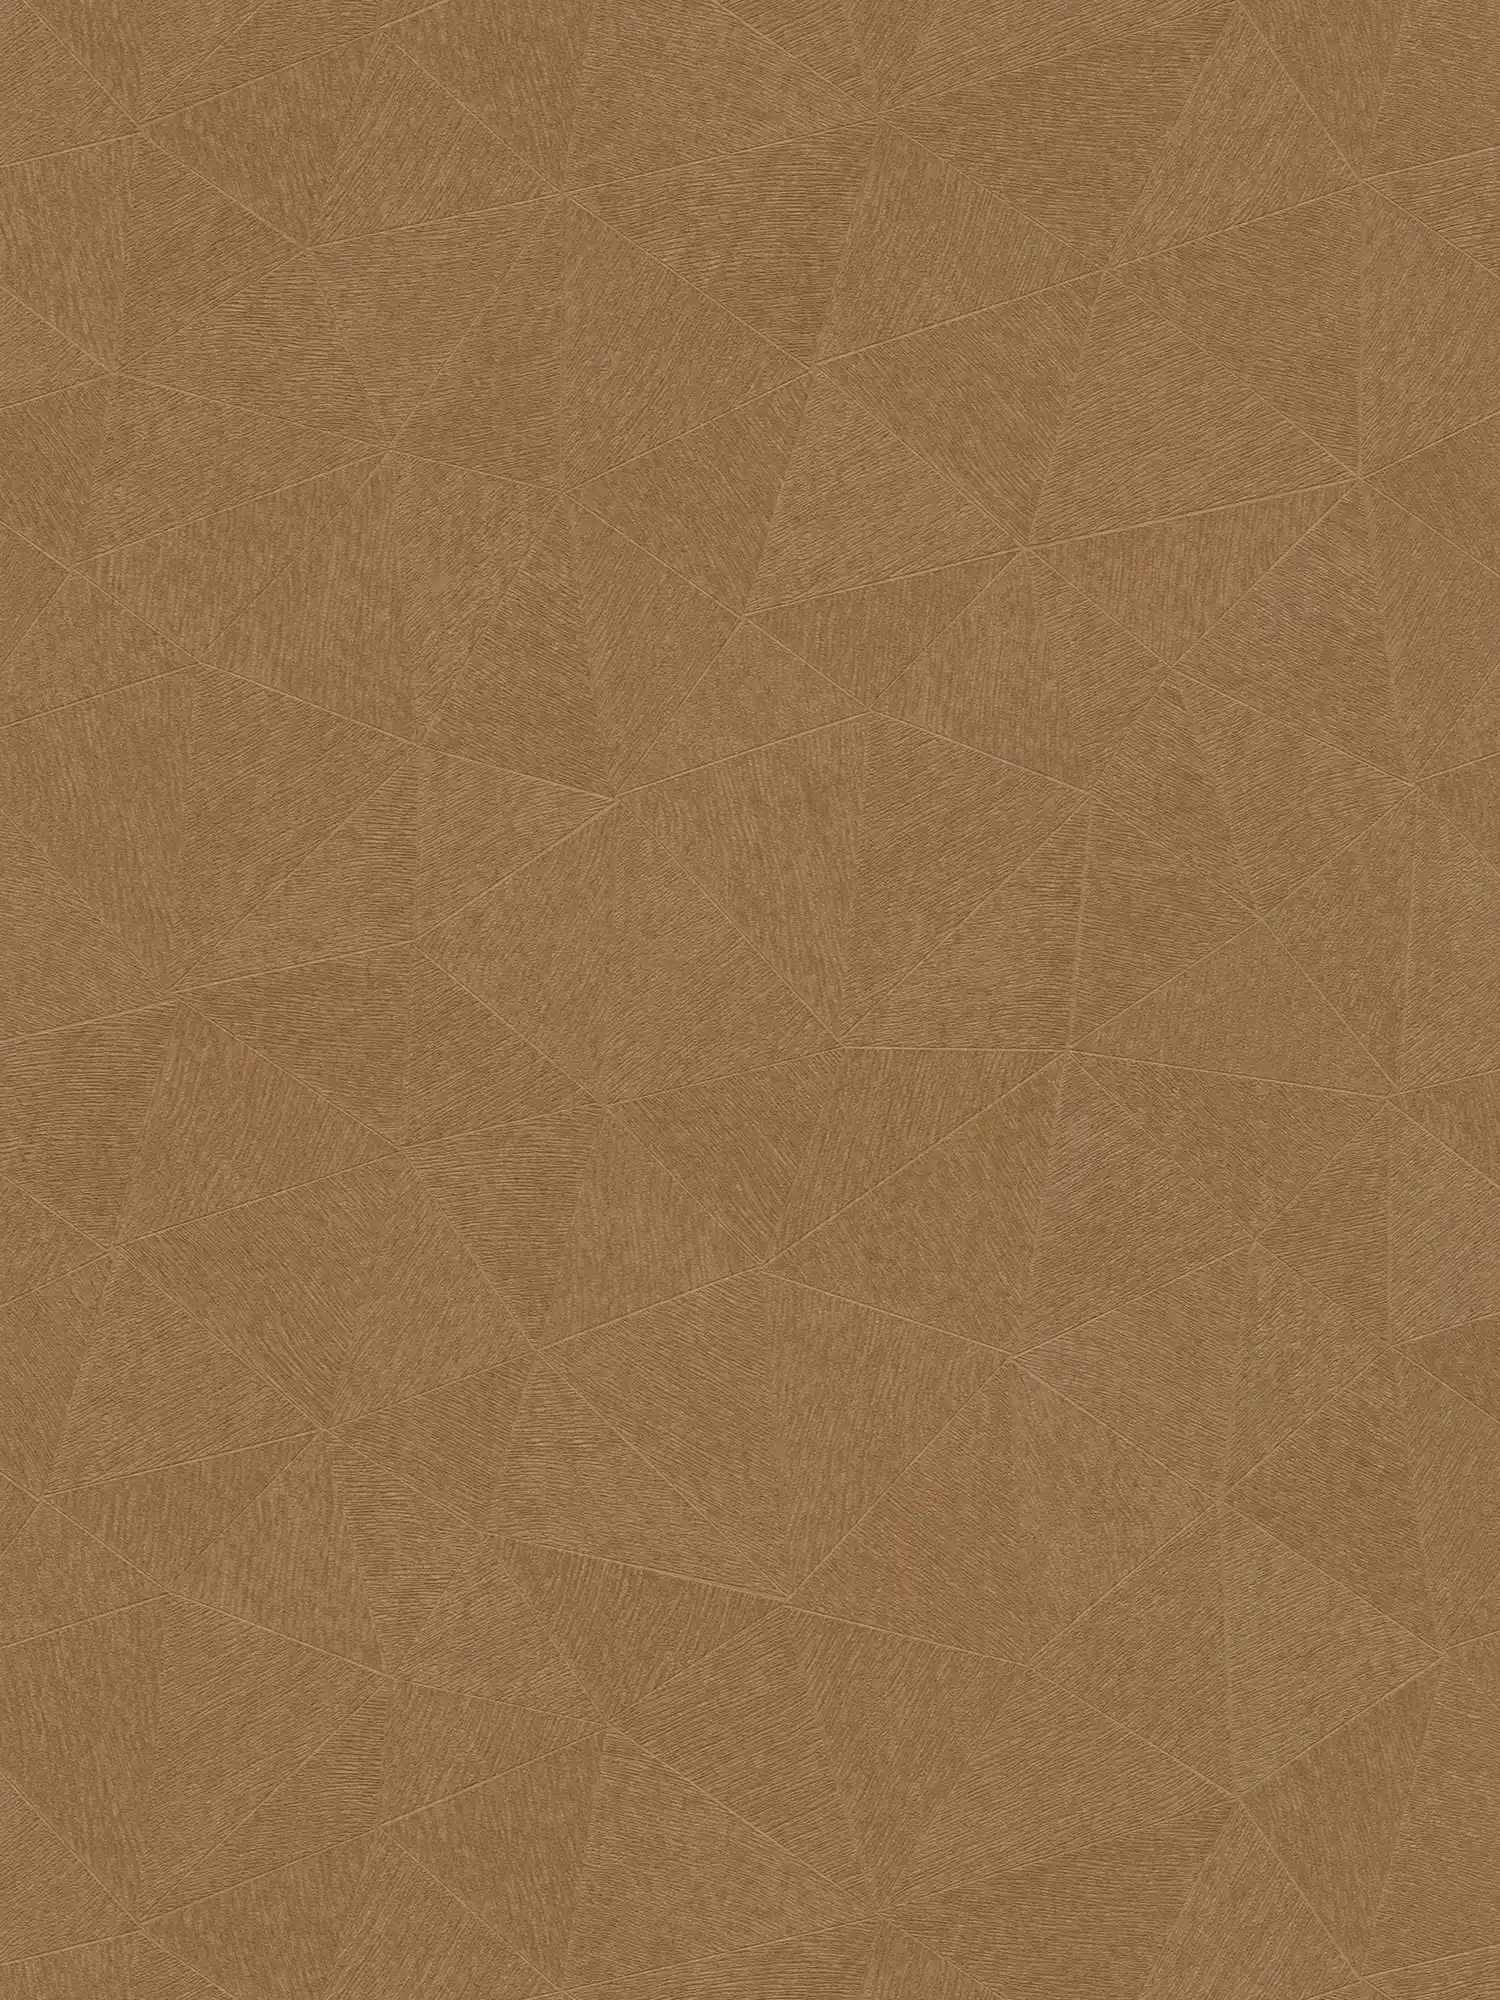 Papel pintado no tejido con discreto motivo triangular - marrón
